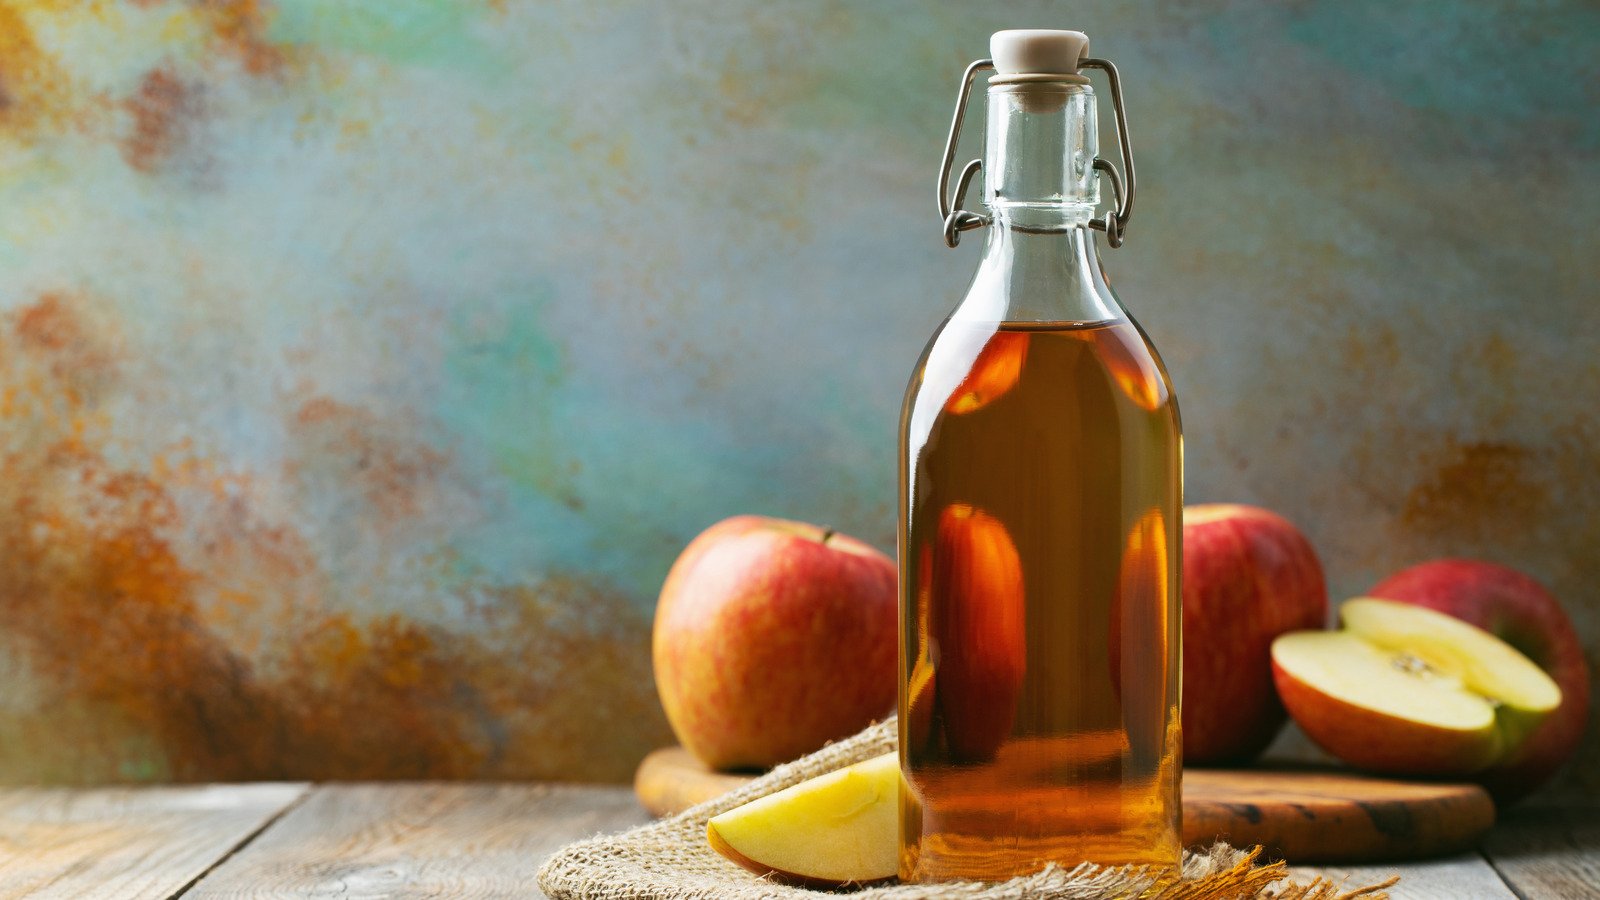 Does Apple Cider Vinegar Really Help Treat A Sunburn?